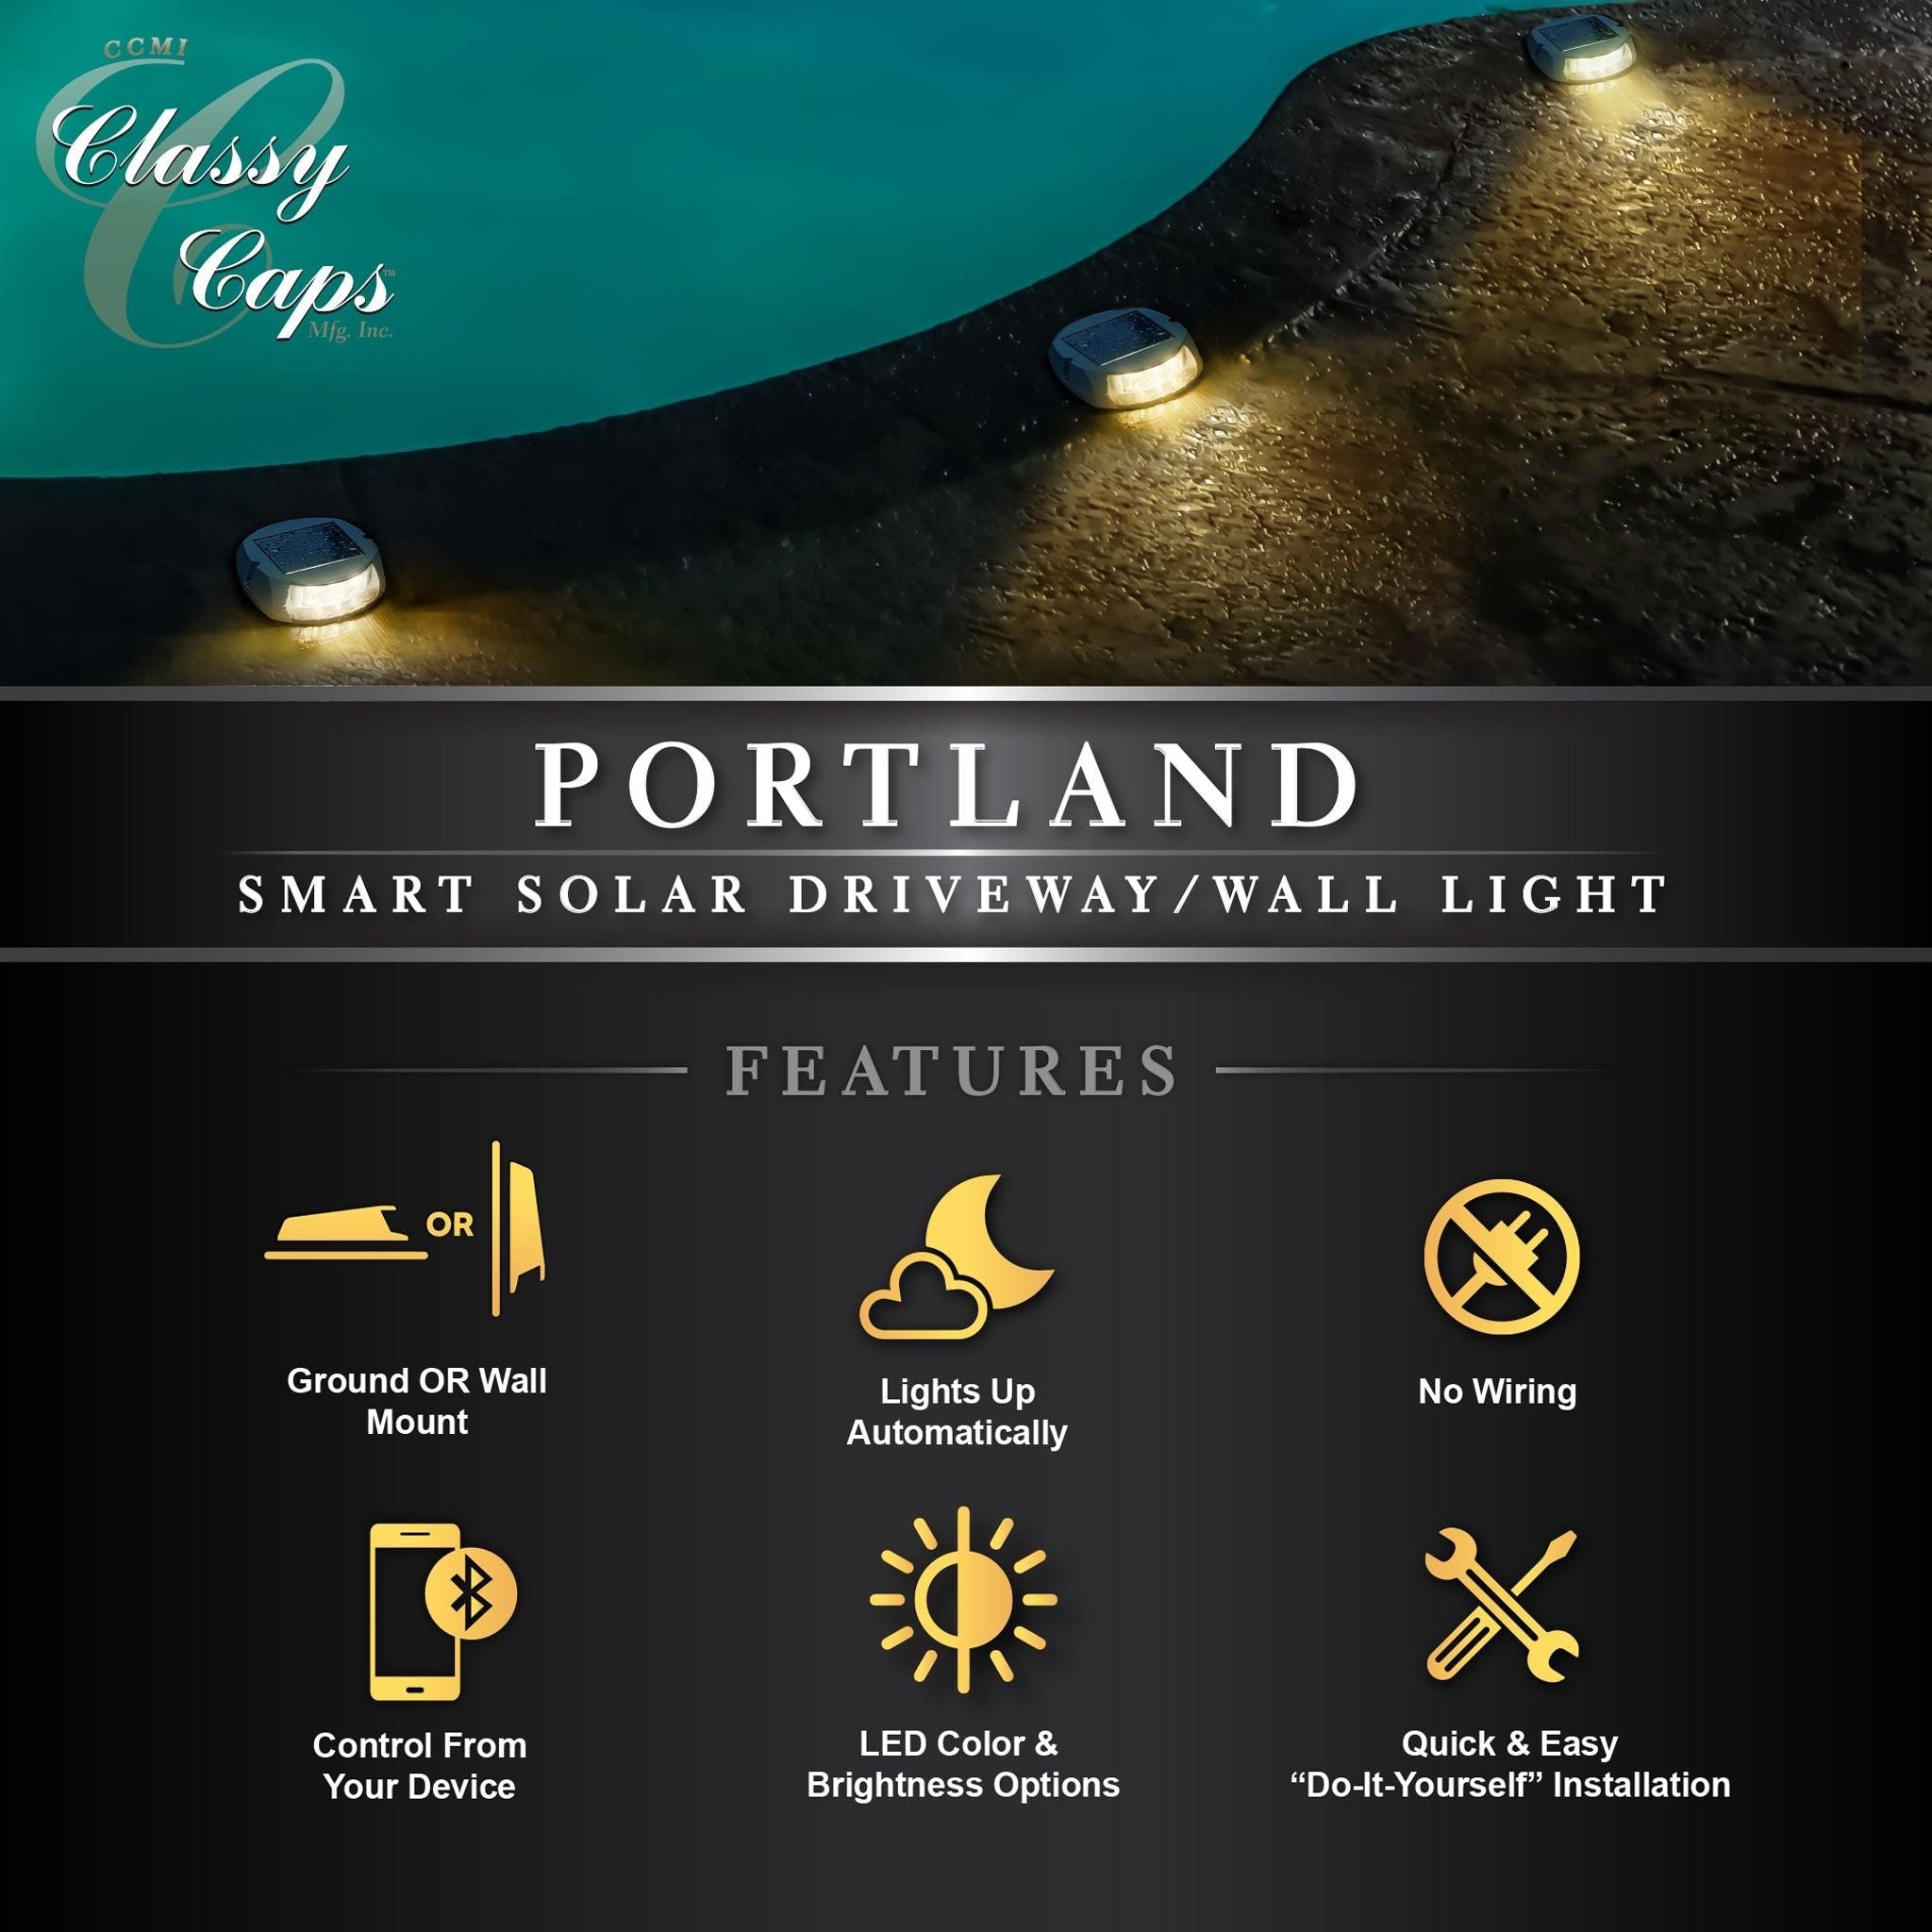 Portland Smart Solar Driveway/Wall Light